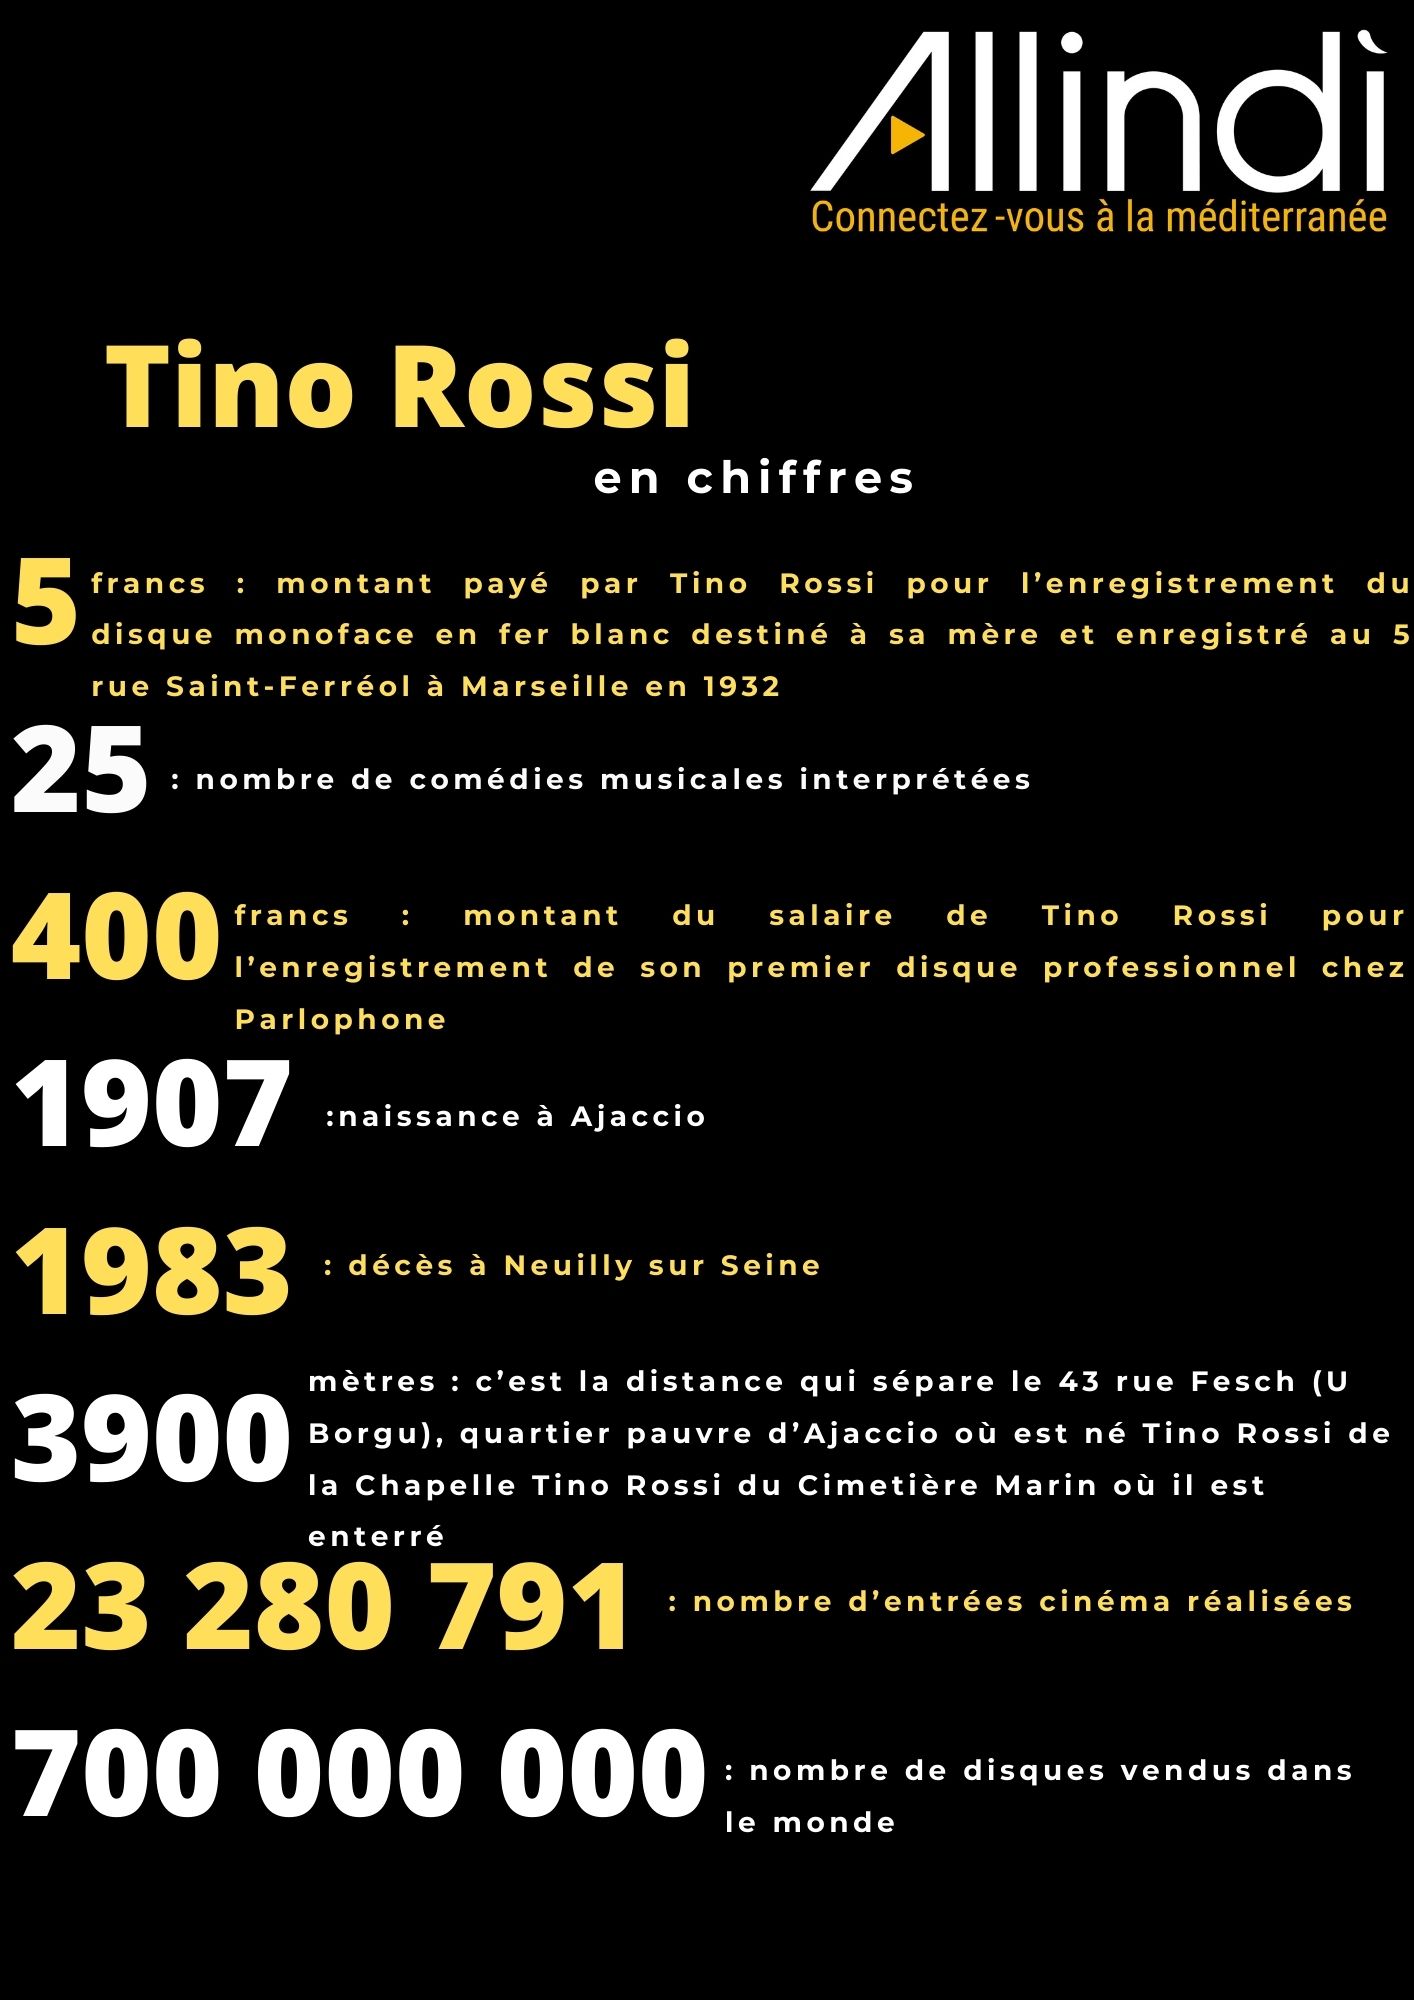 Tino Rossi en chiffres